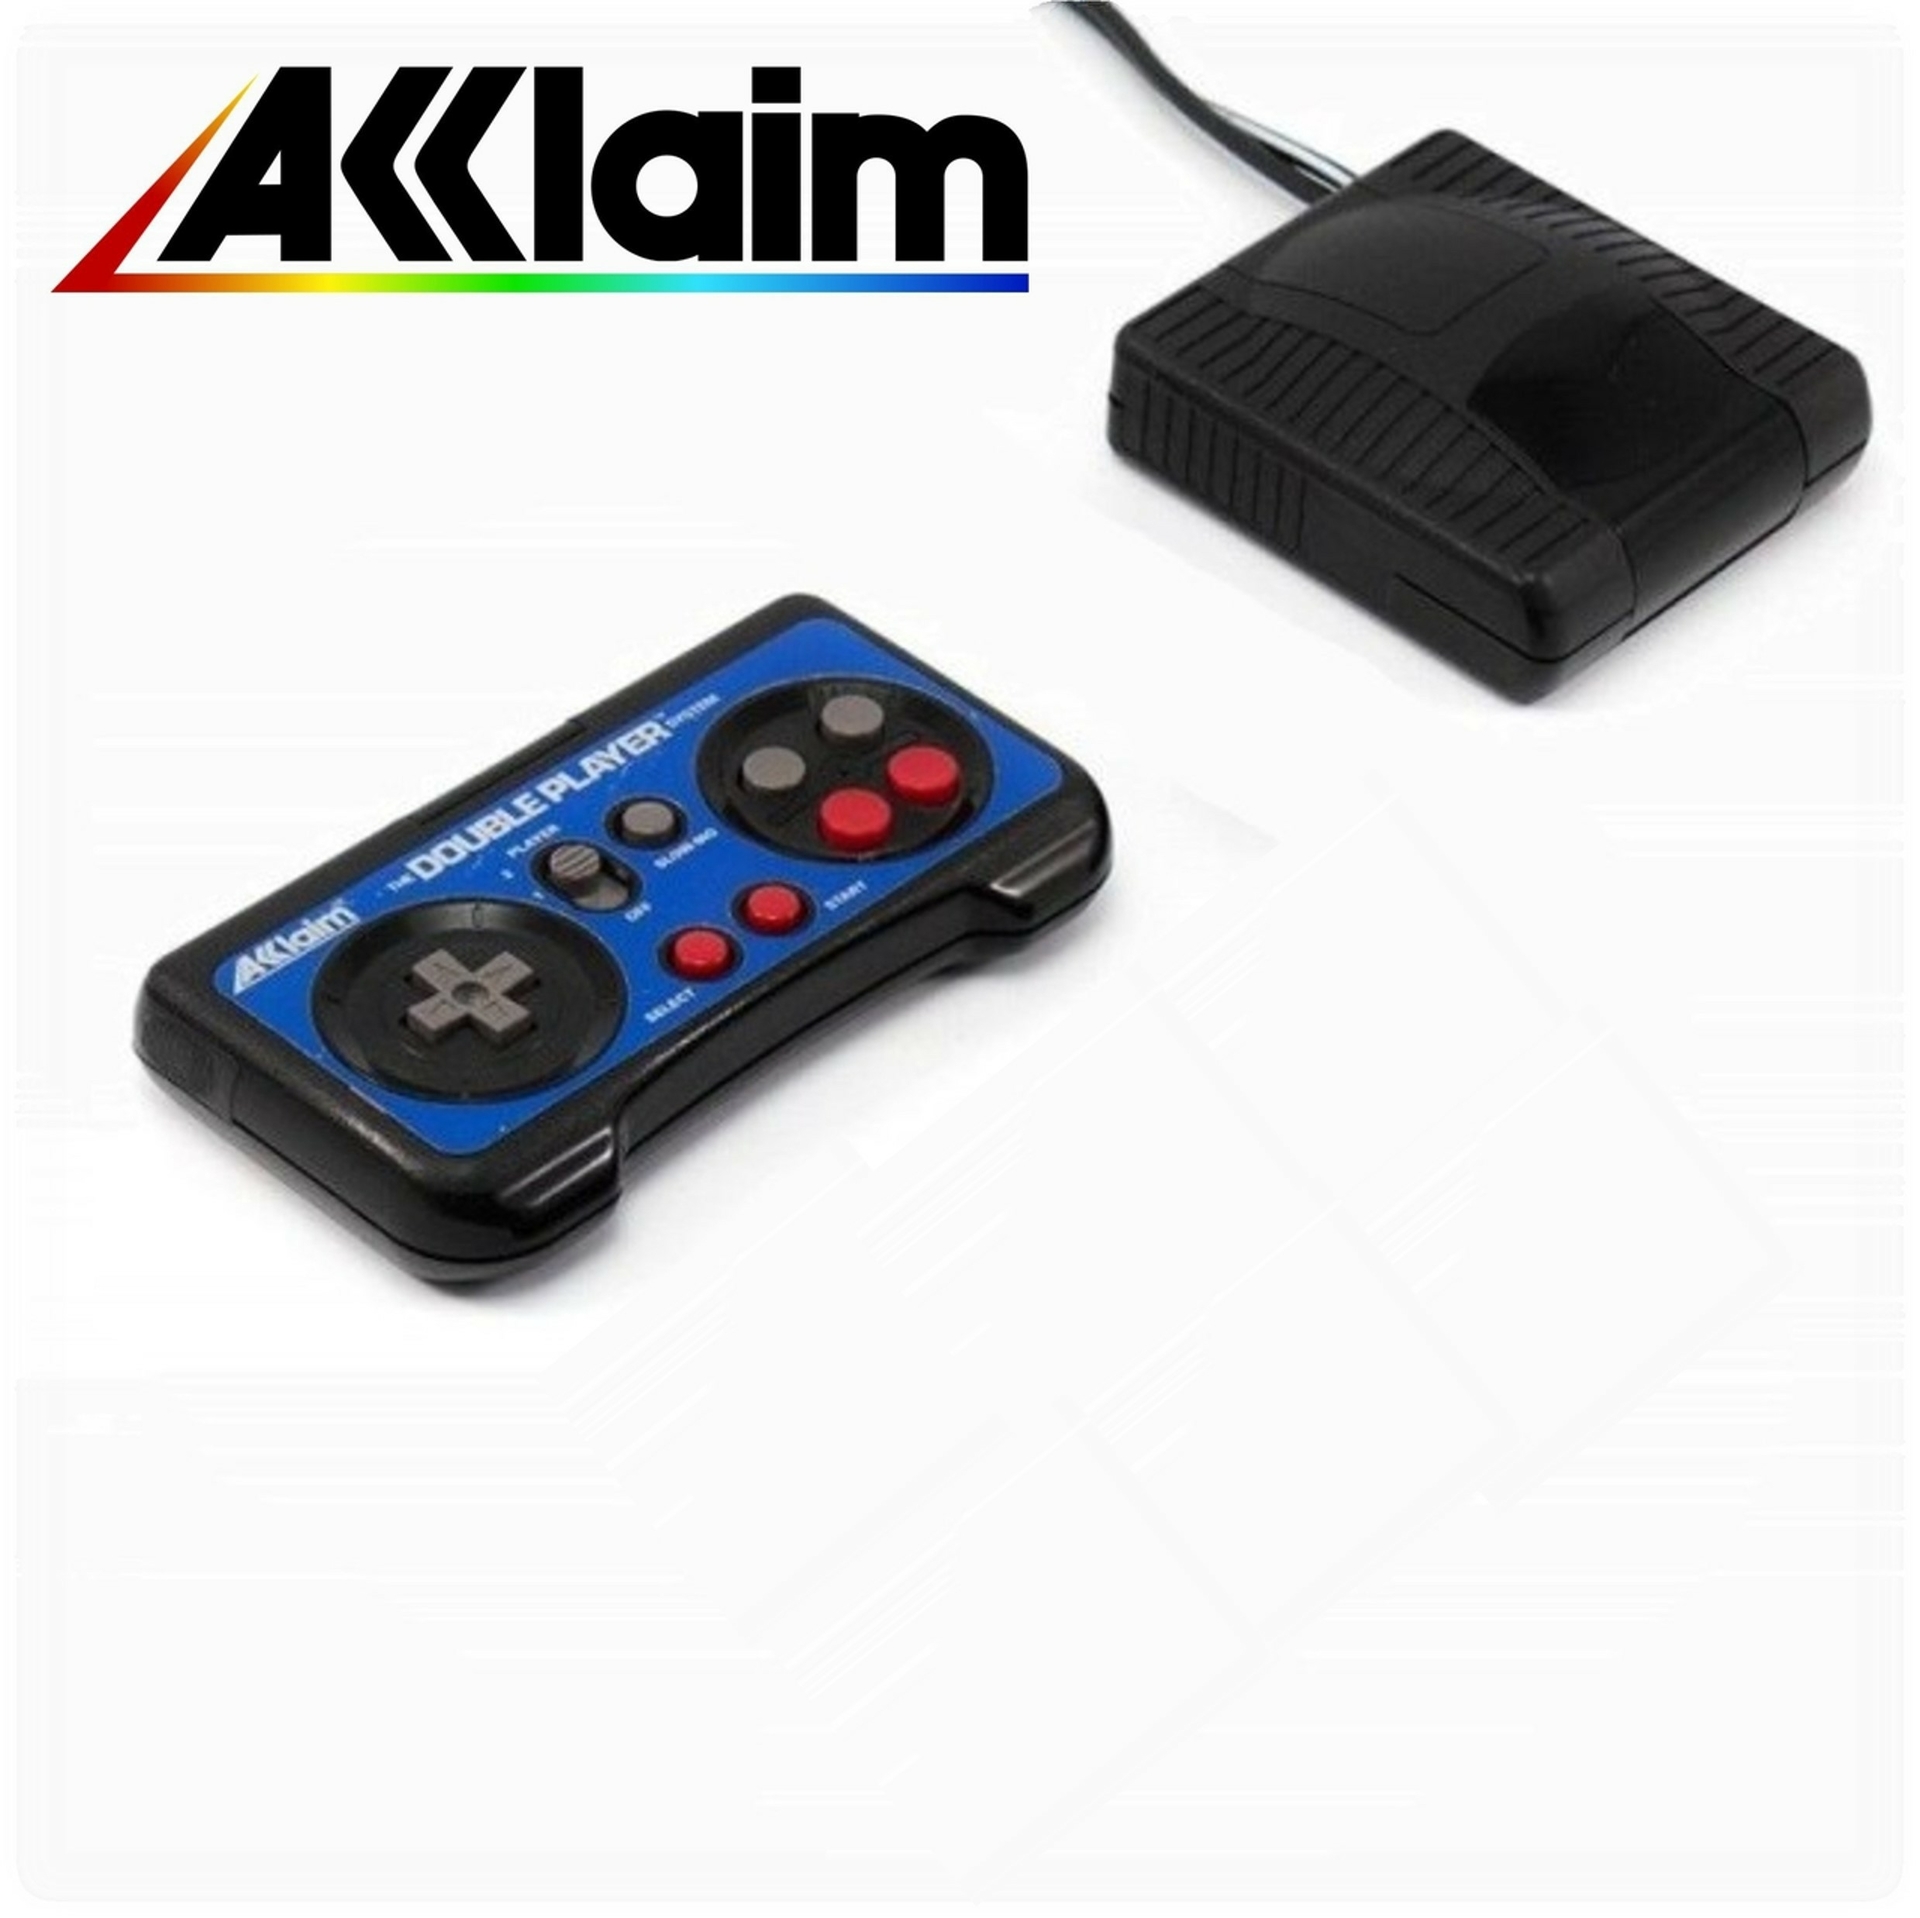 Akklaim Wireless Single Player System - Nintendo NES Hardware